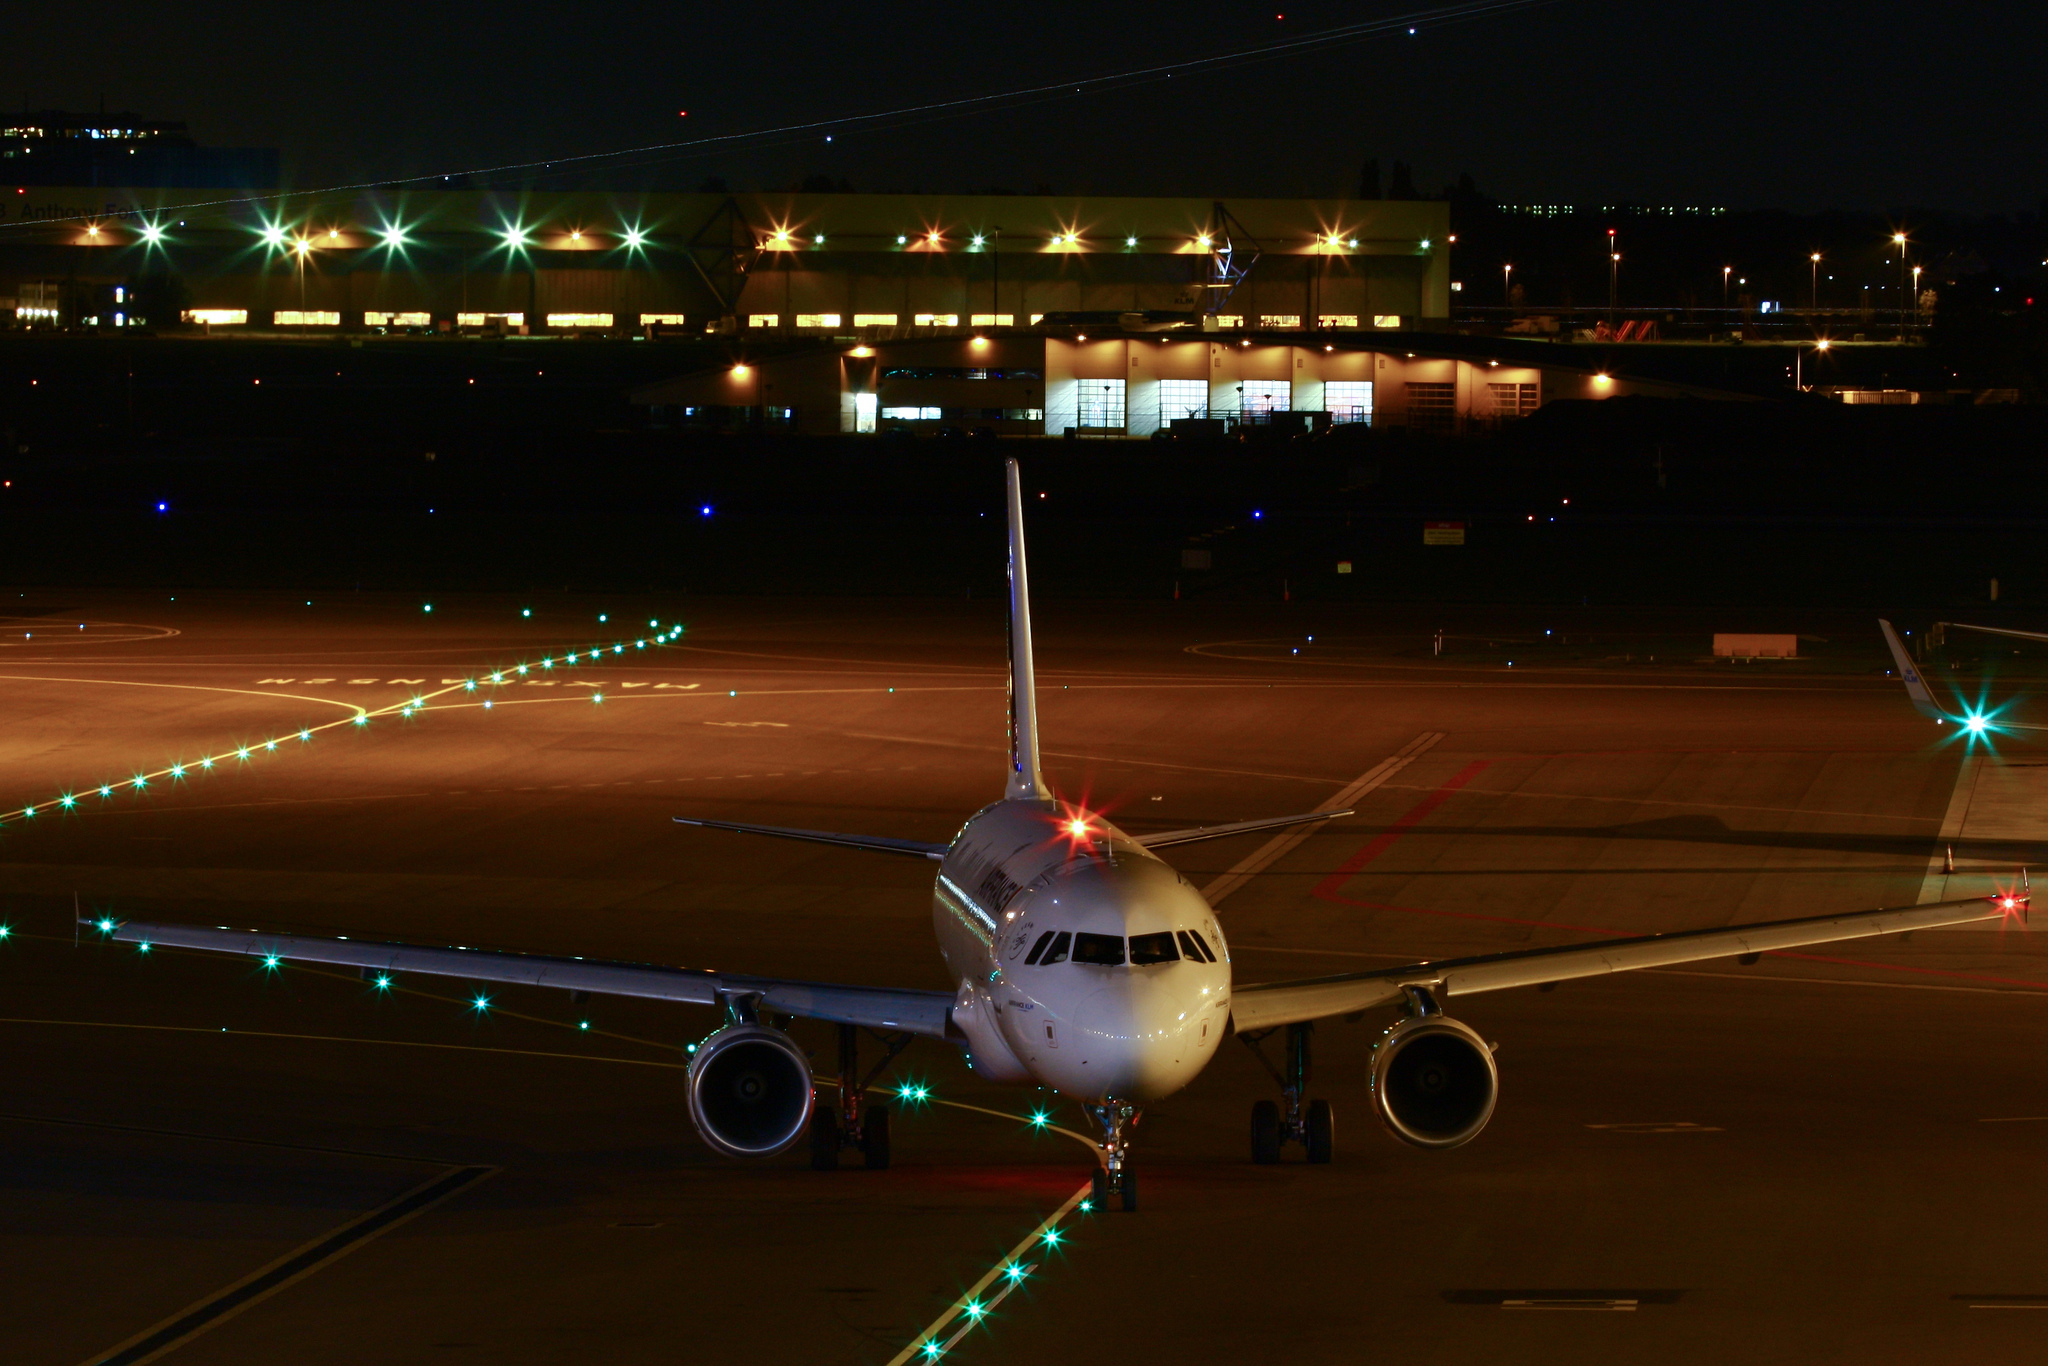 Vehicles - Aircraft  Airplane Passenger Plane Night Vehicle Airport Wallpaper